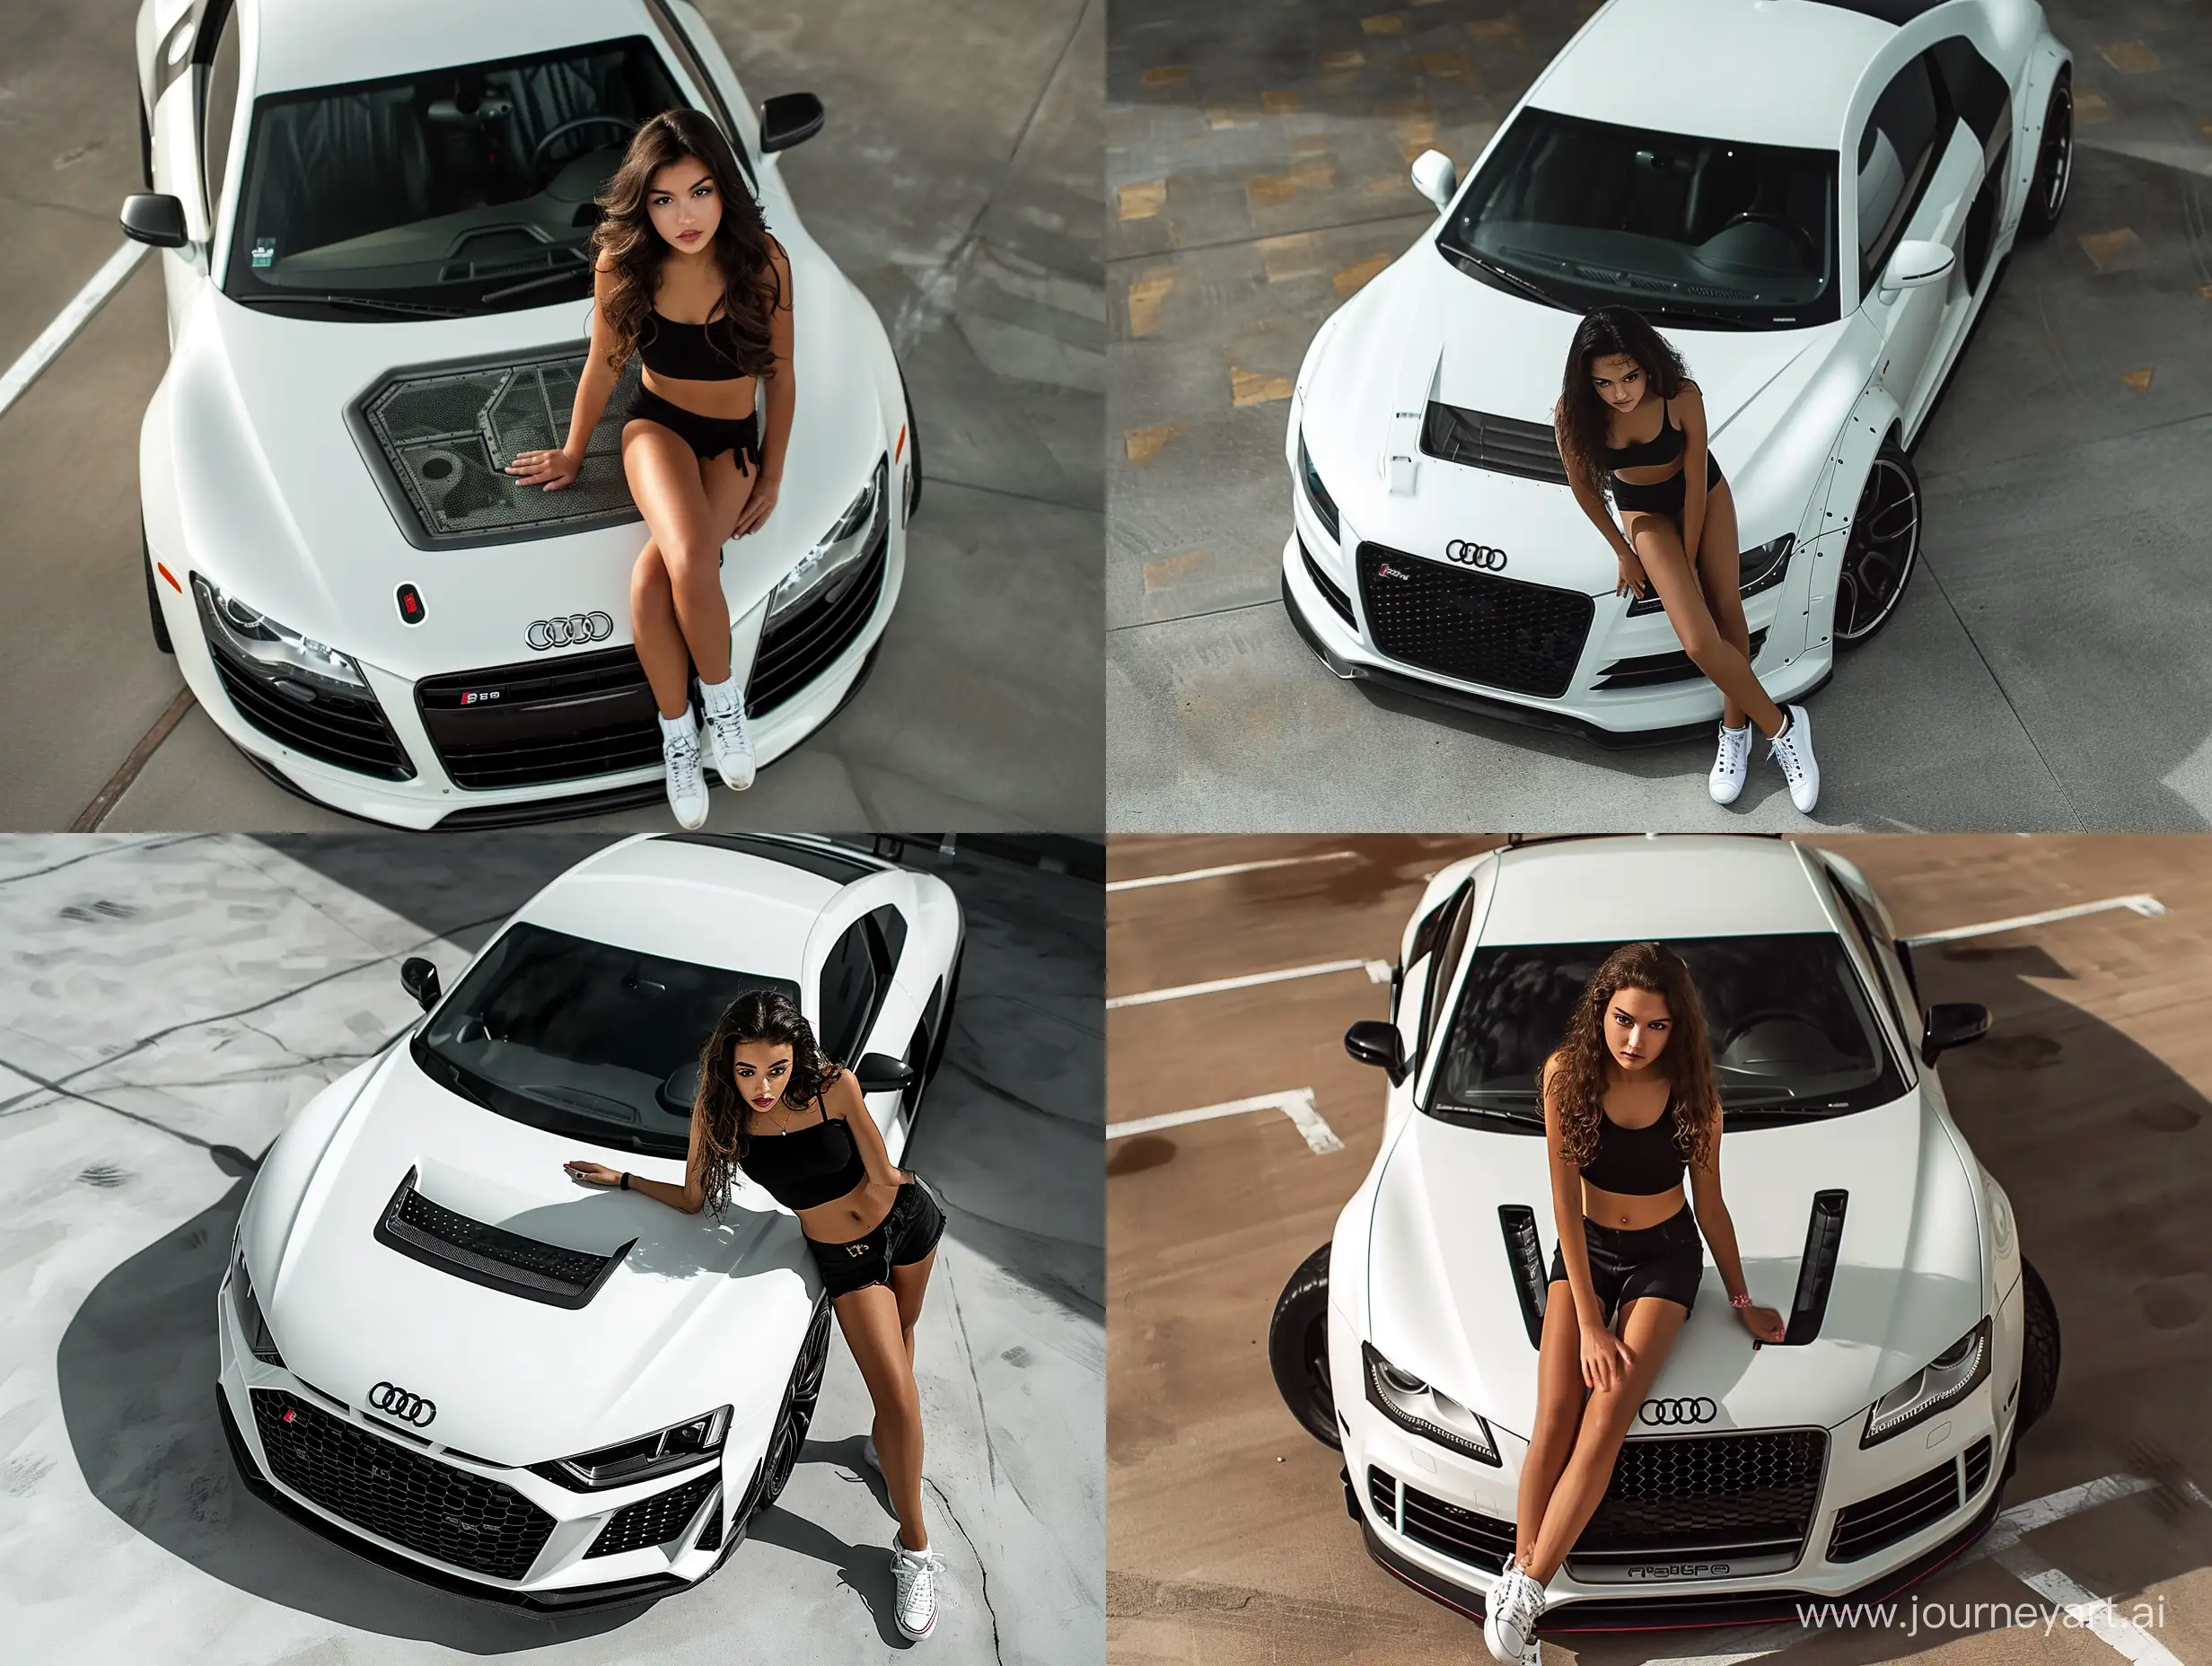 Stylish-Brunette-Poses-on-White-Audi-GTR-Top-View-Fashion-Shot